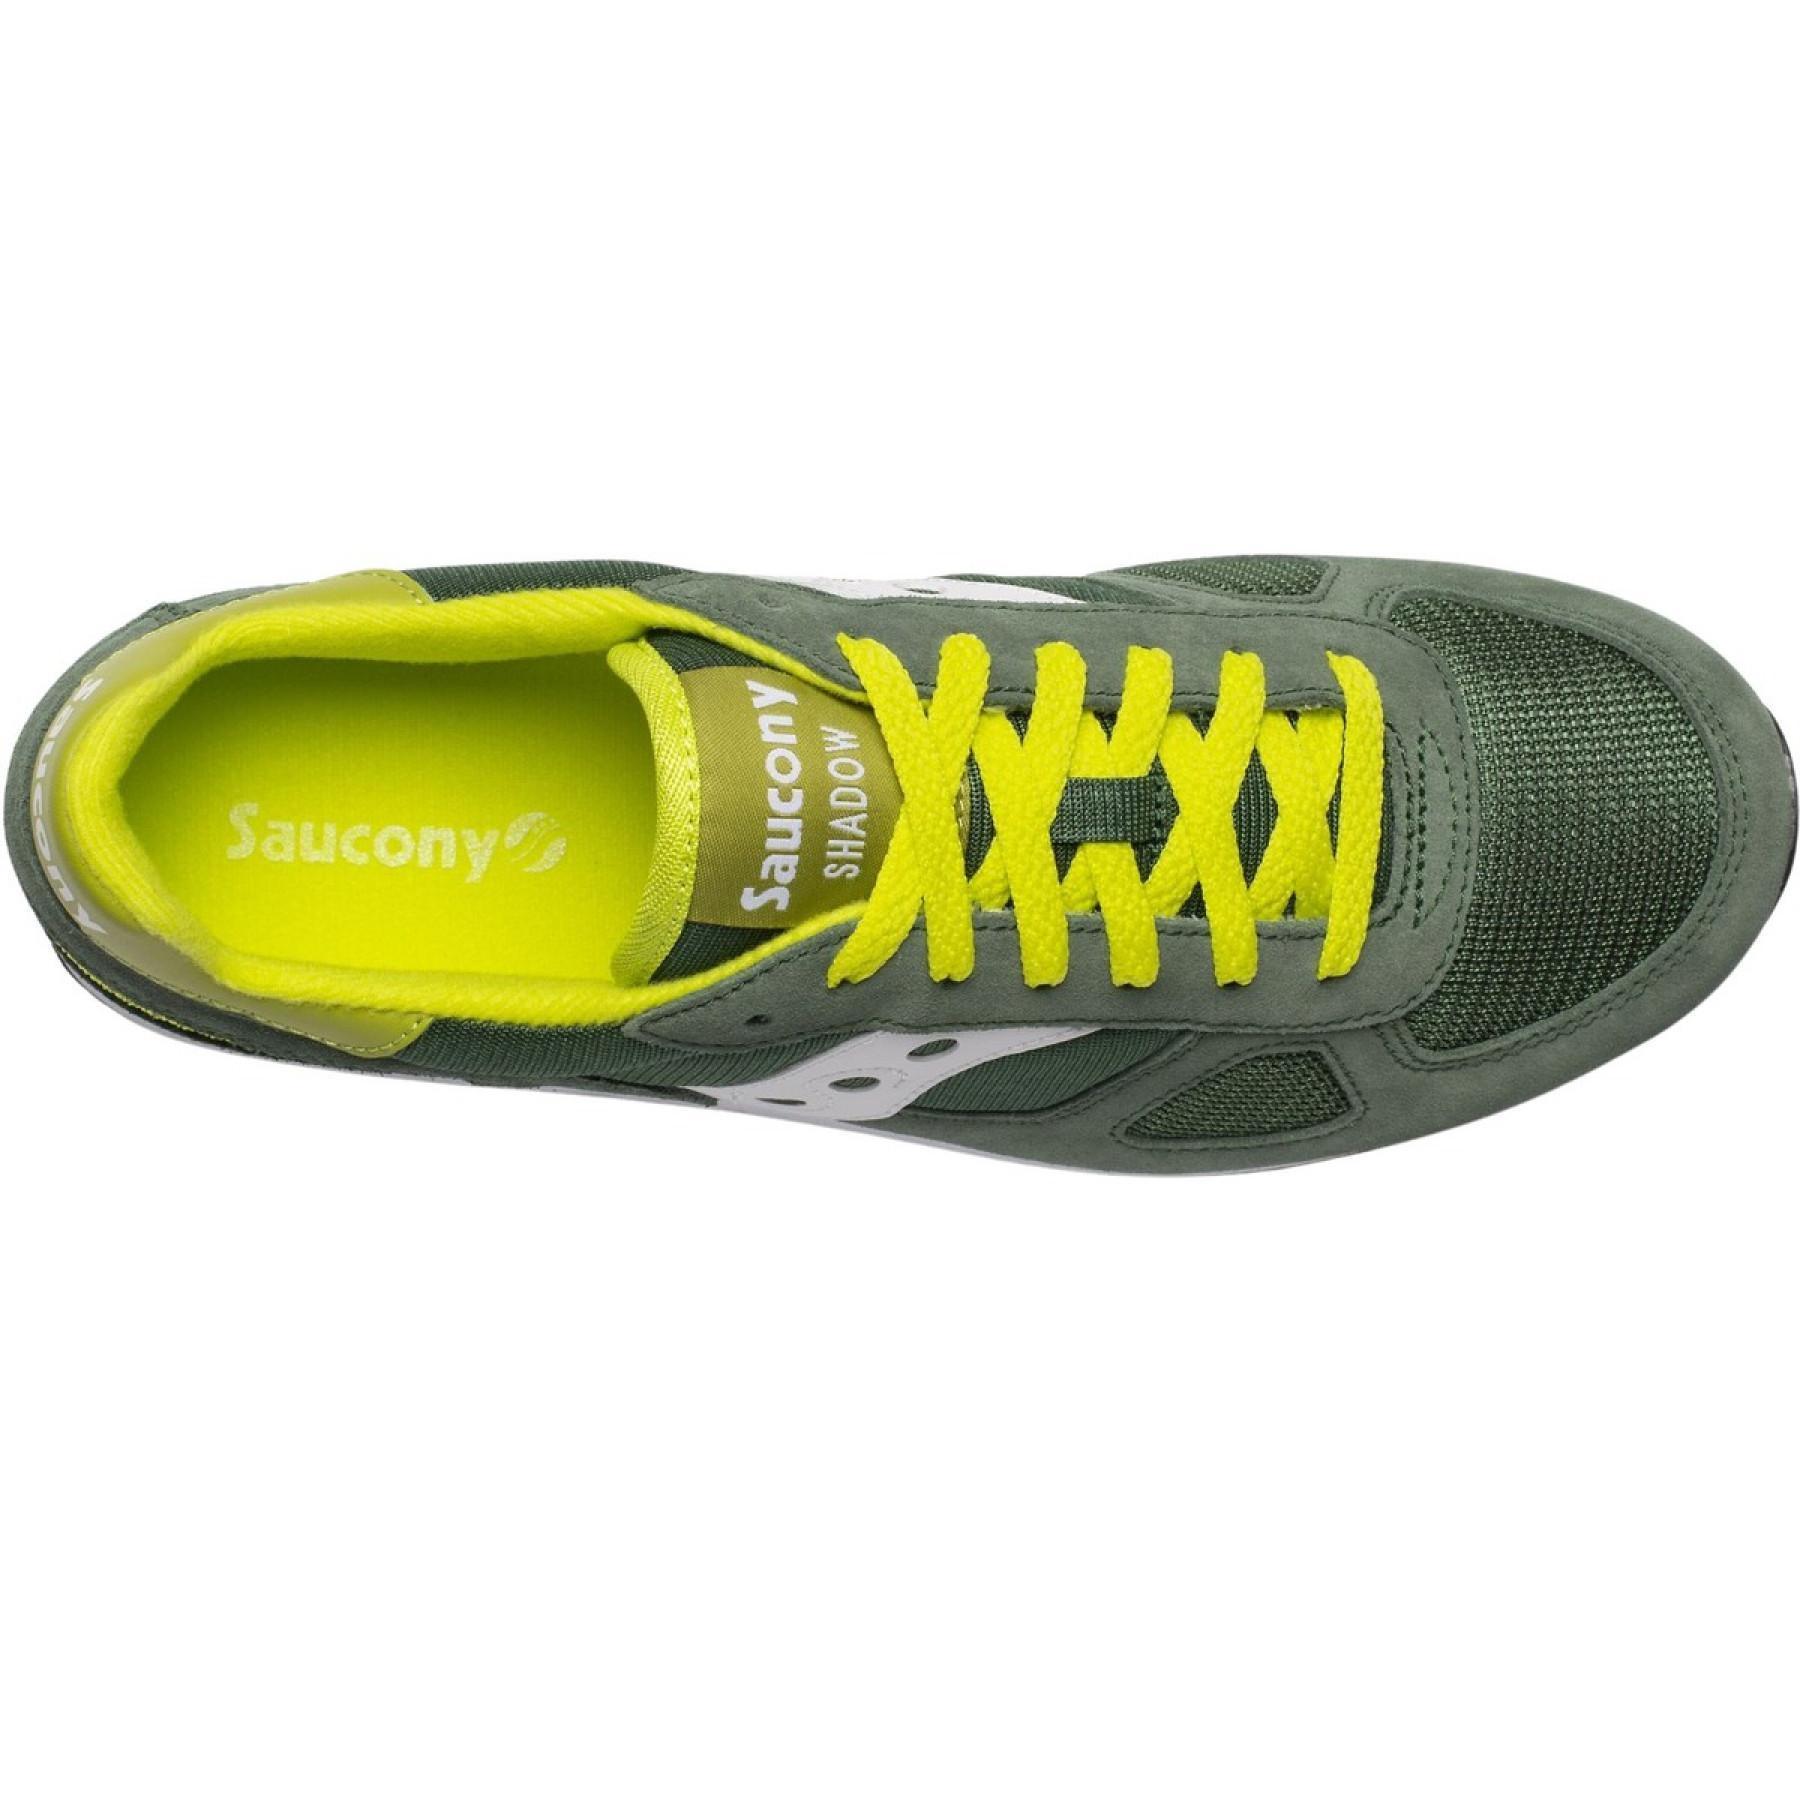 Sneakers Saucony Shadow Original Green/White/Yellow